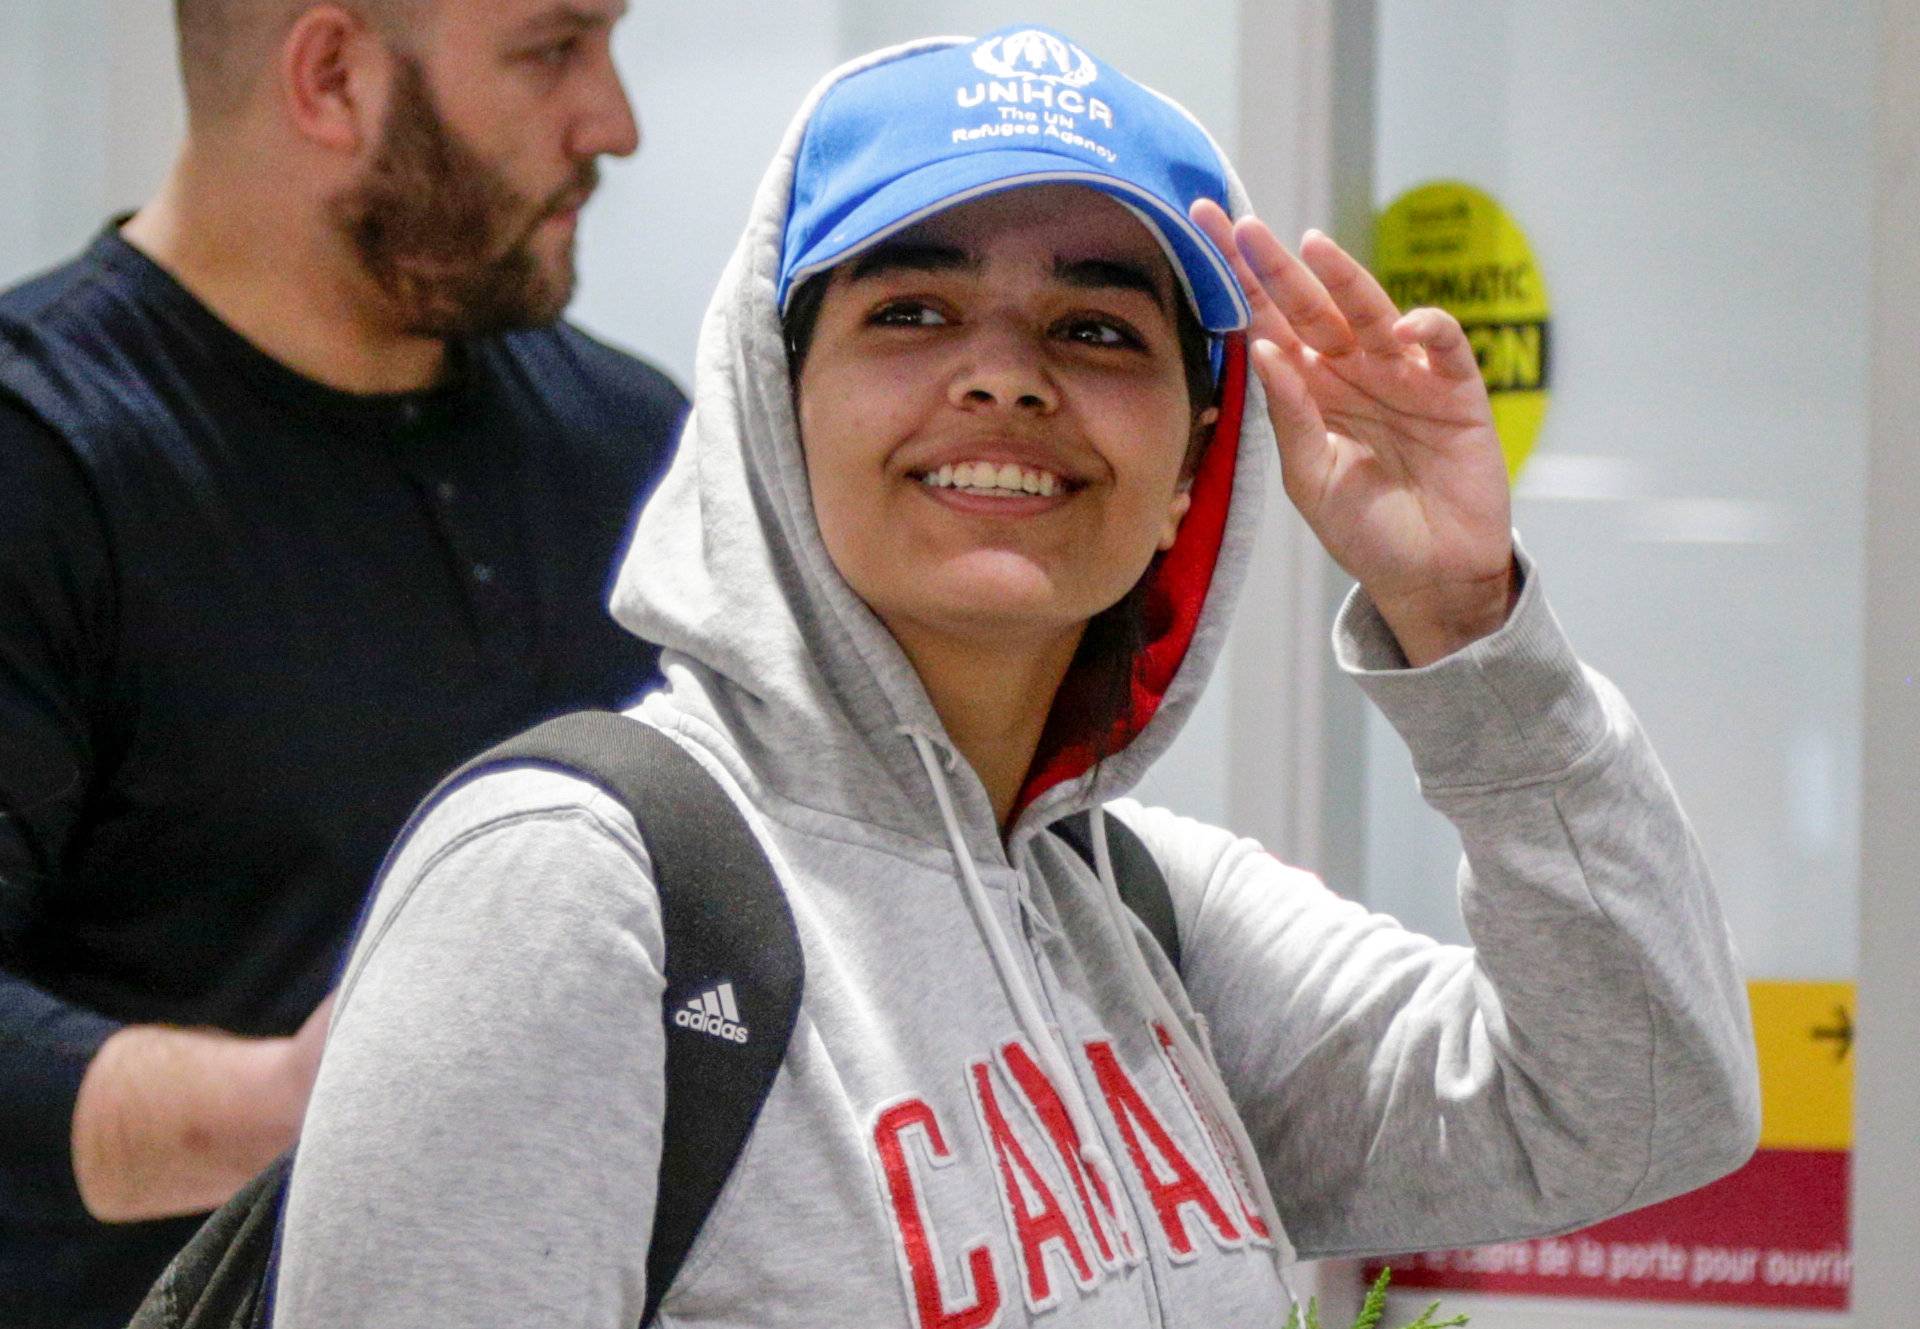 Saudi teenager Rahaf Mohammed al-Qunun arrives in Canada at Toronto Pearson International Airport